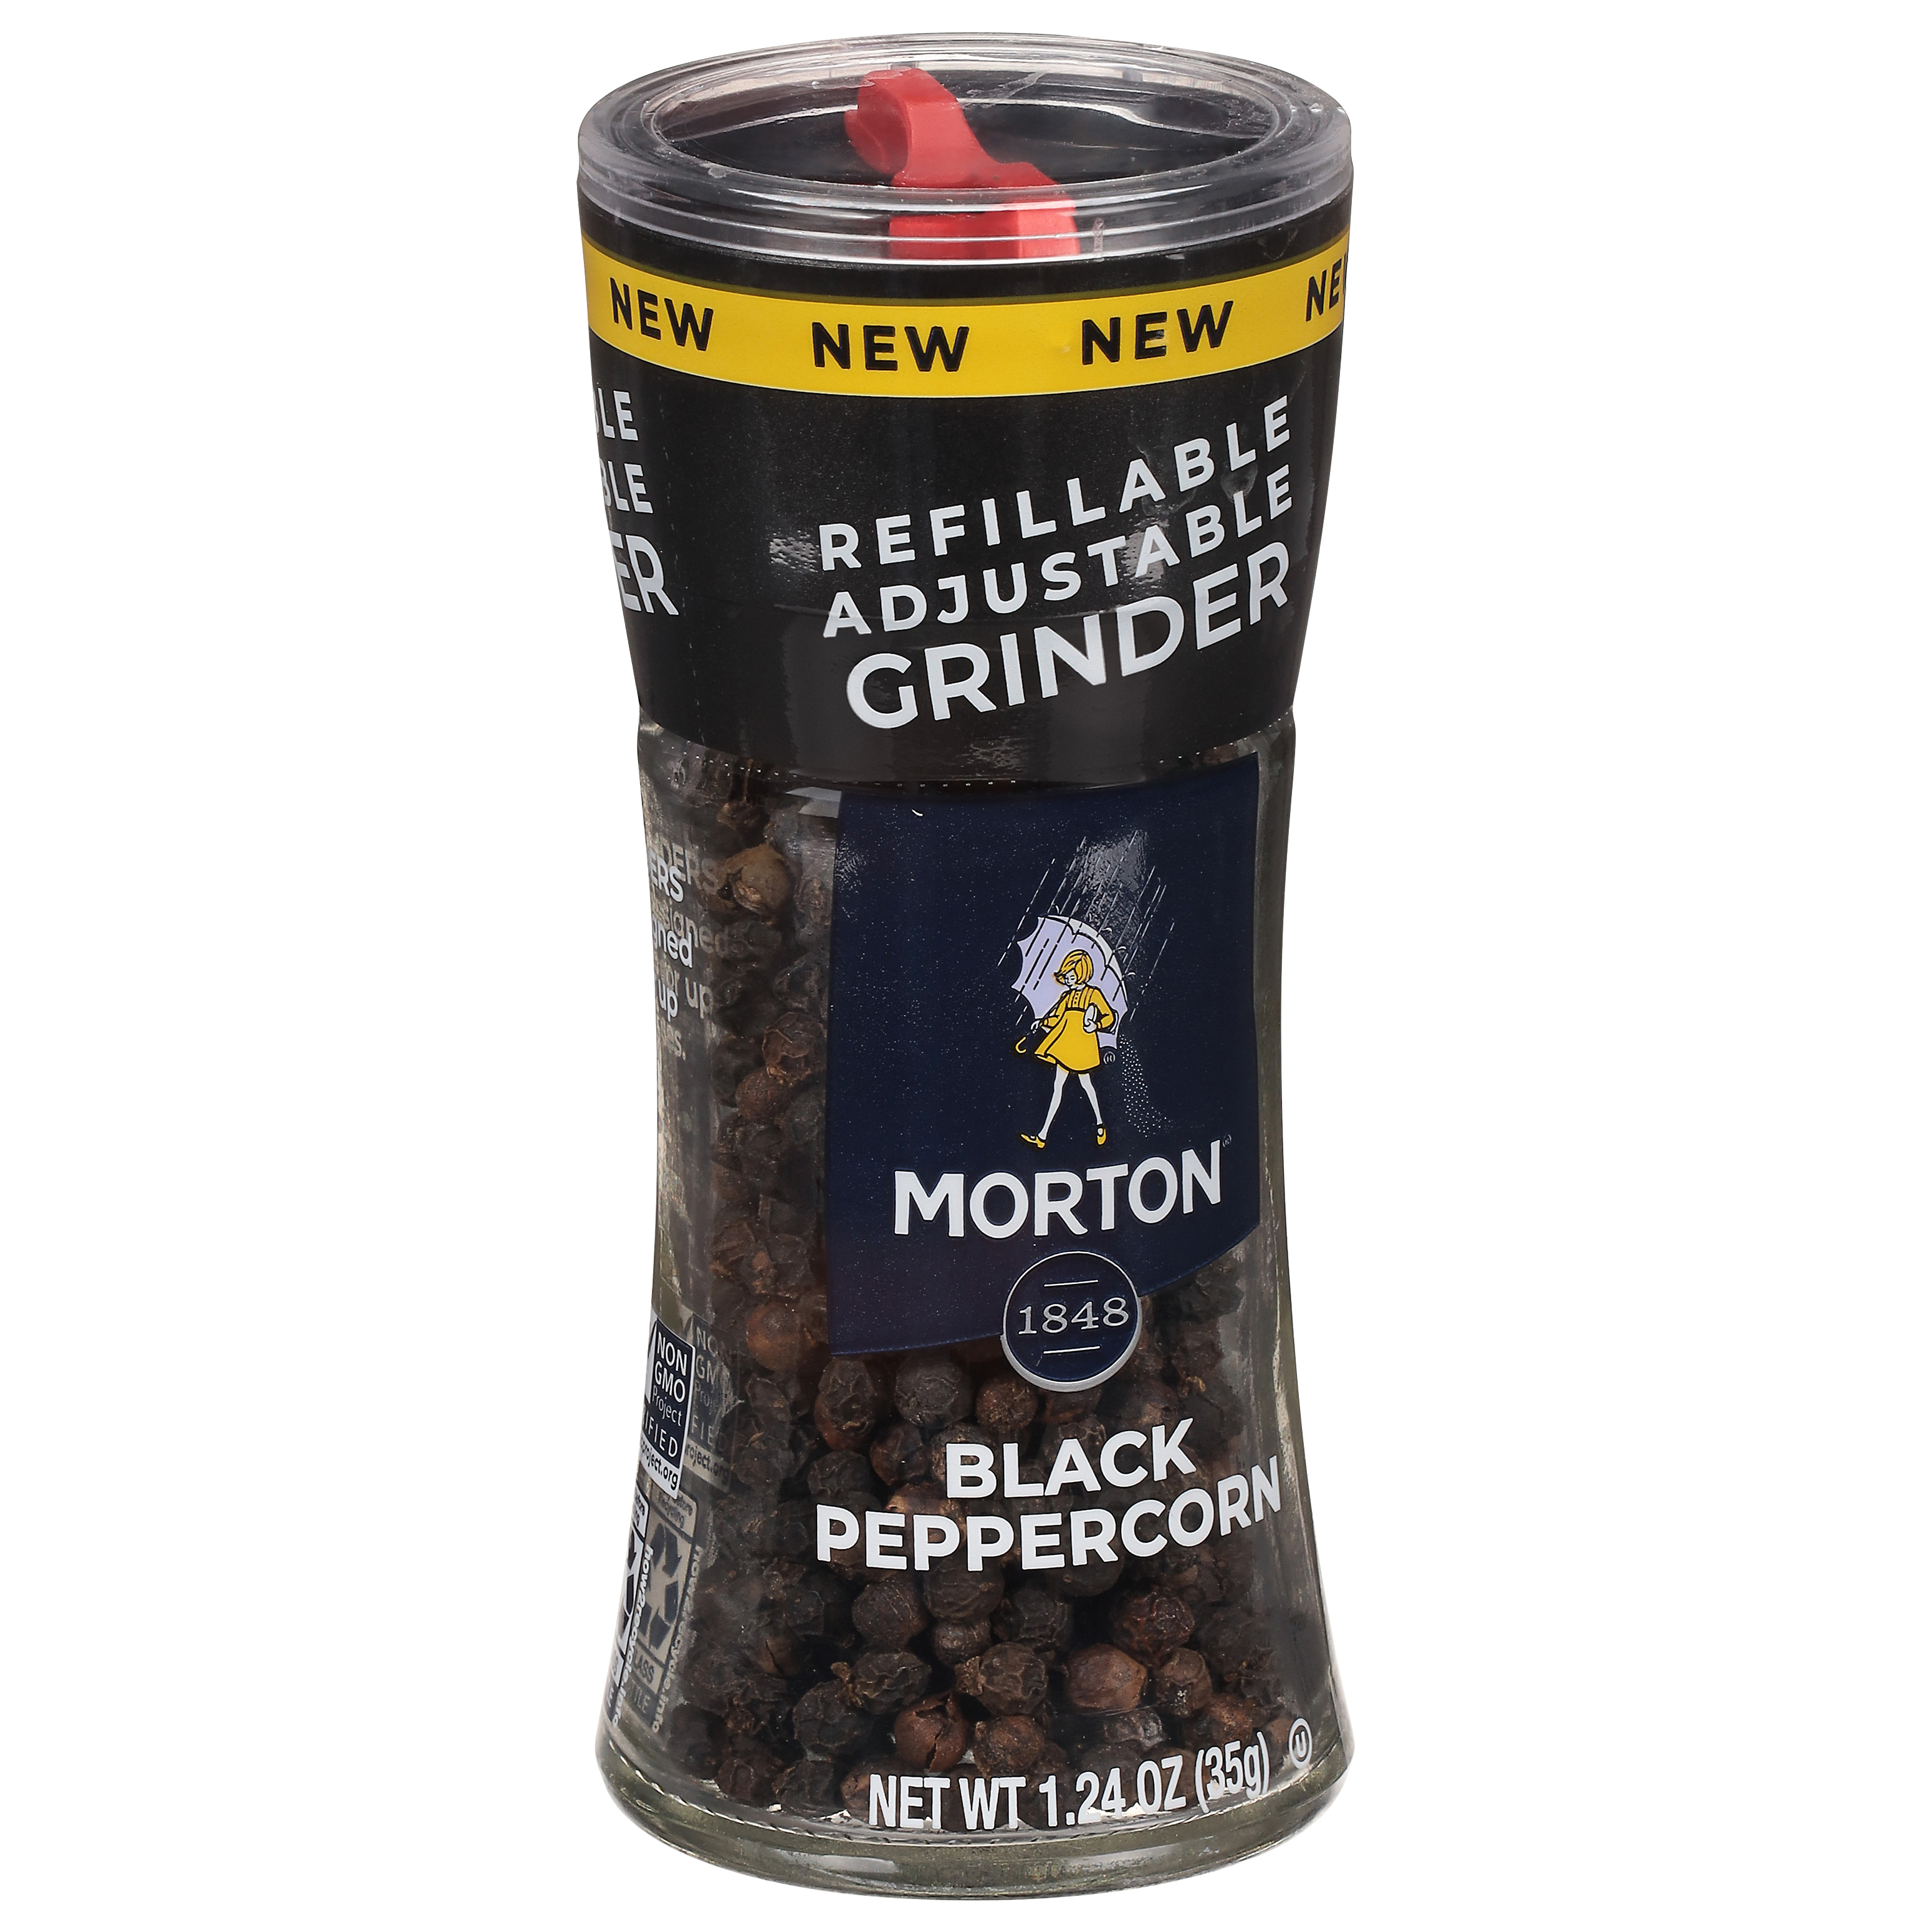  McCormick Grinder Black Peppercorn 1.24OZ (Pack of 12